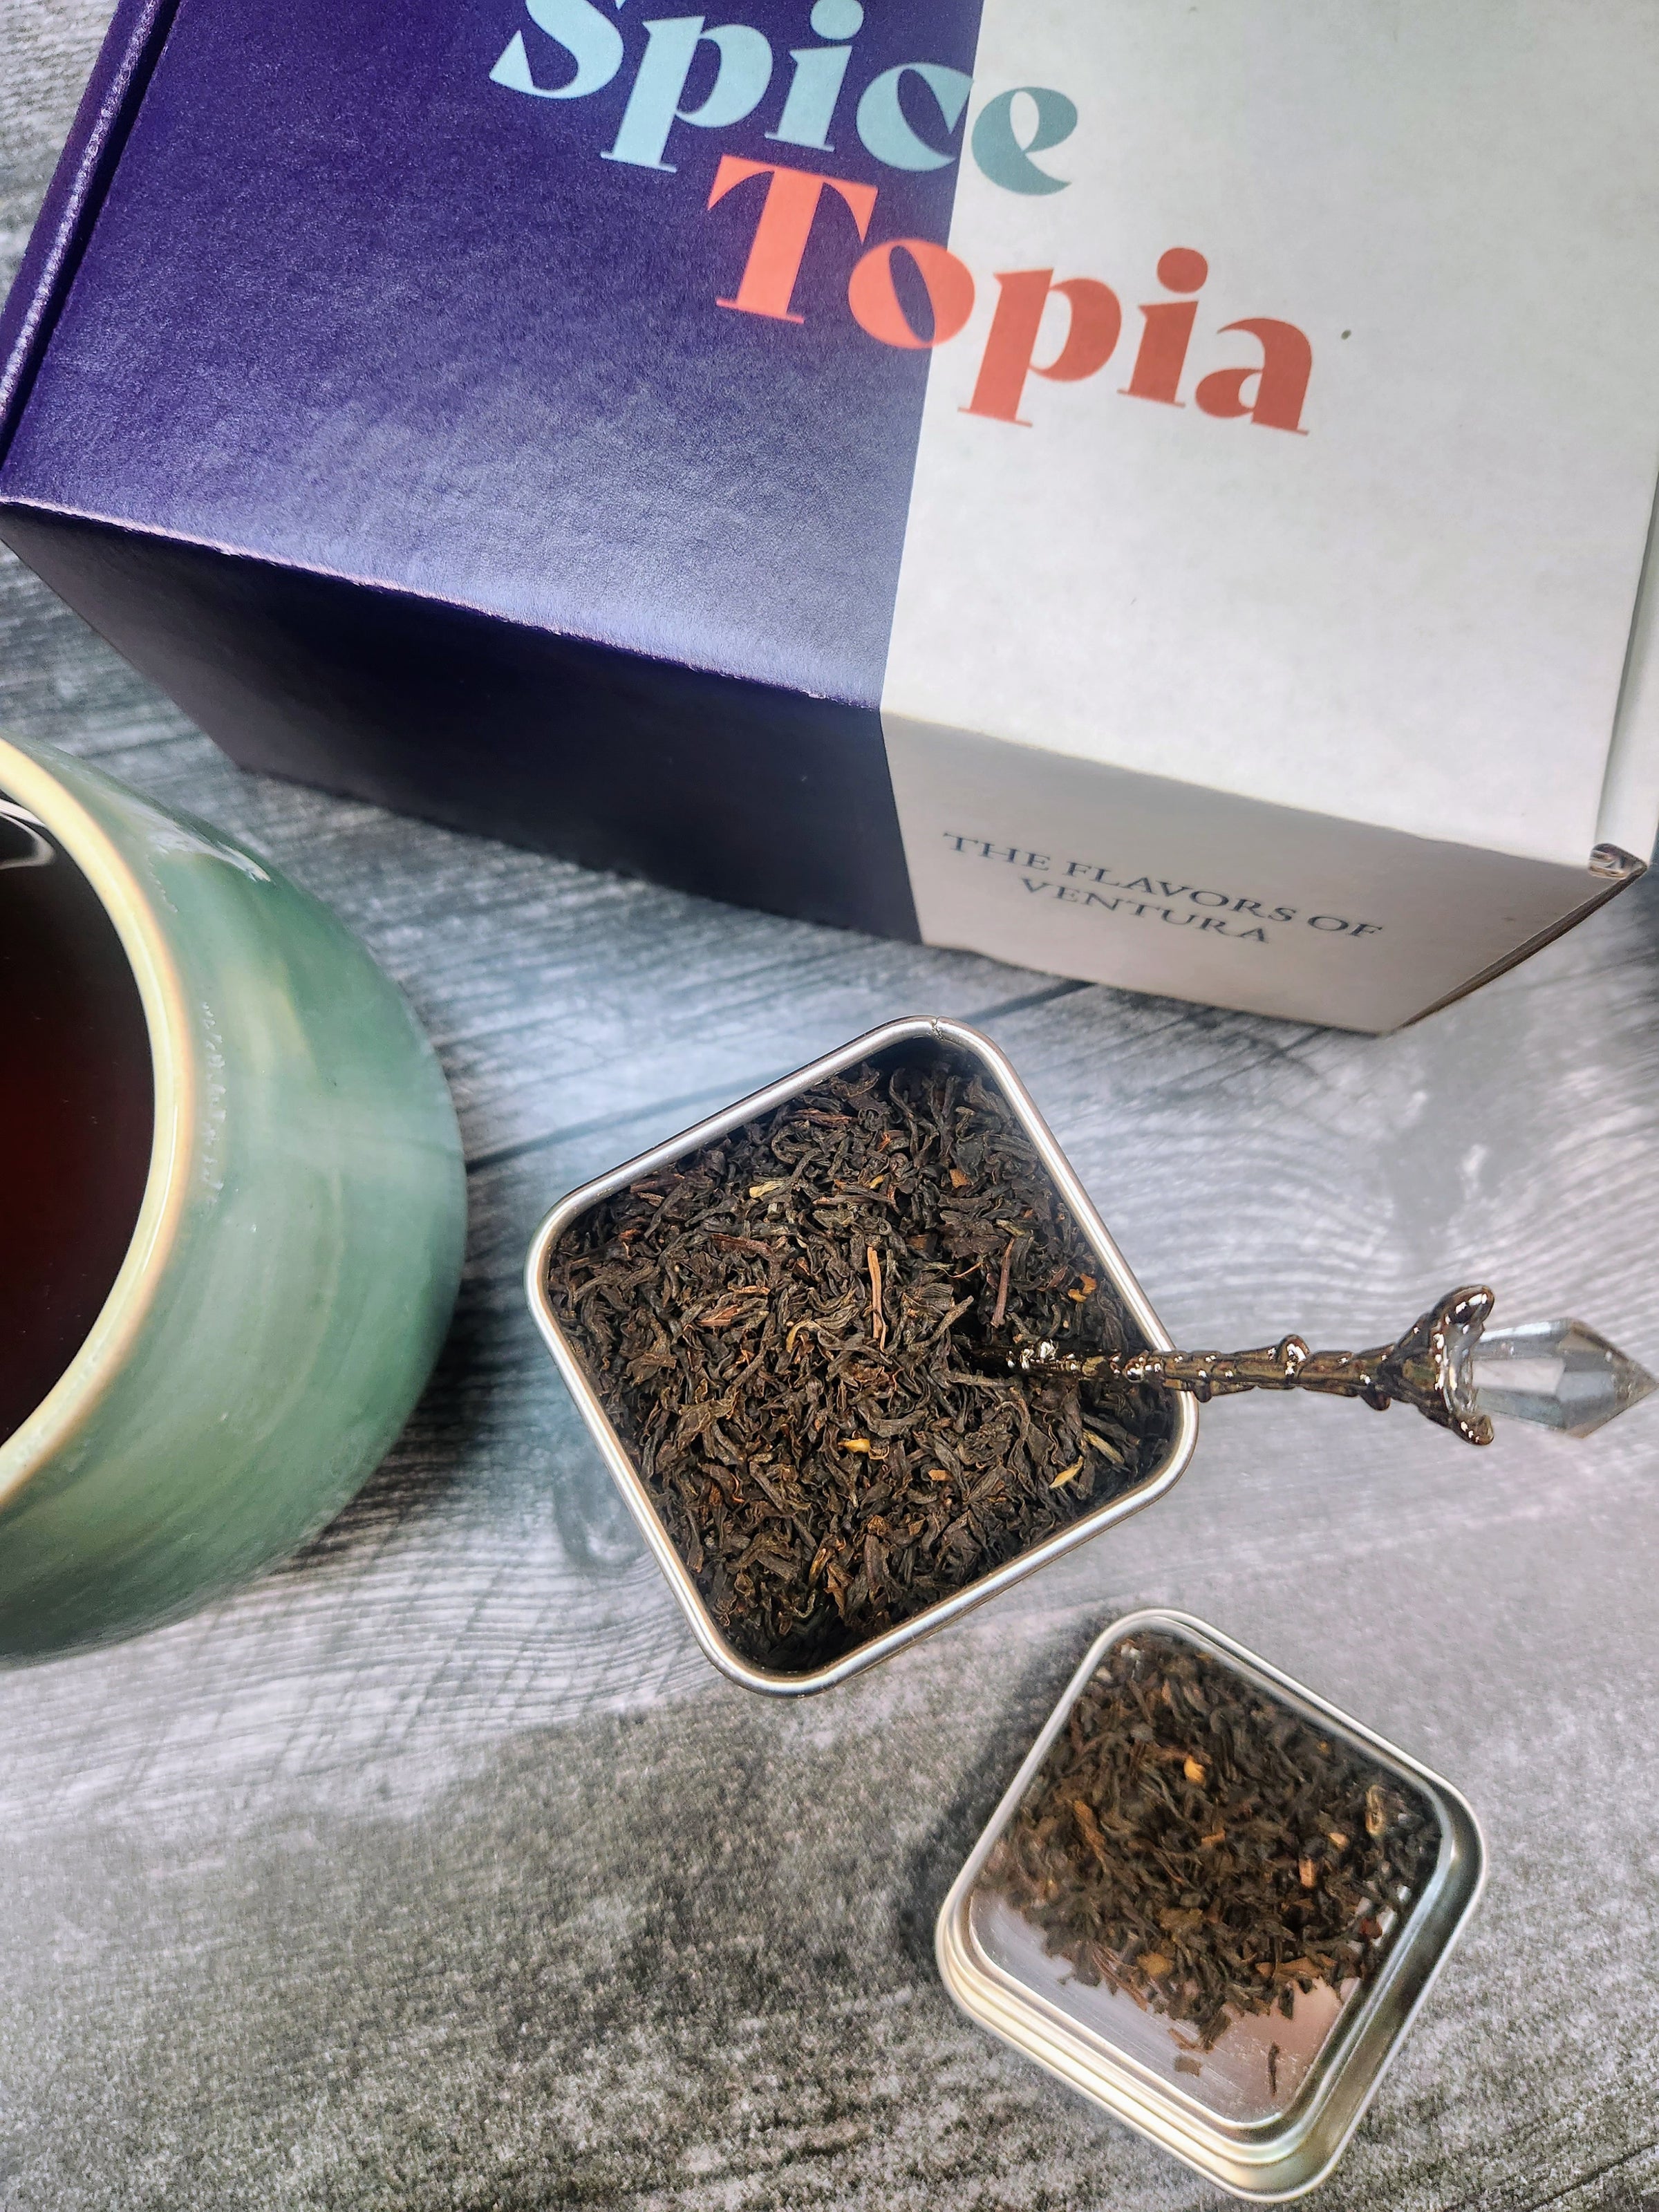 Boba Pearls (2.2lb) – Piper and Leaf Tea Co.